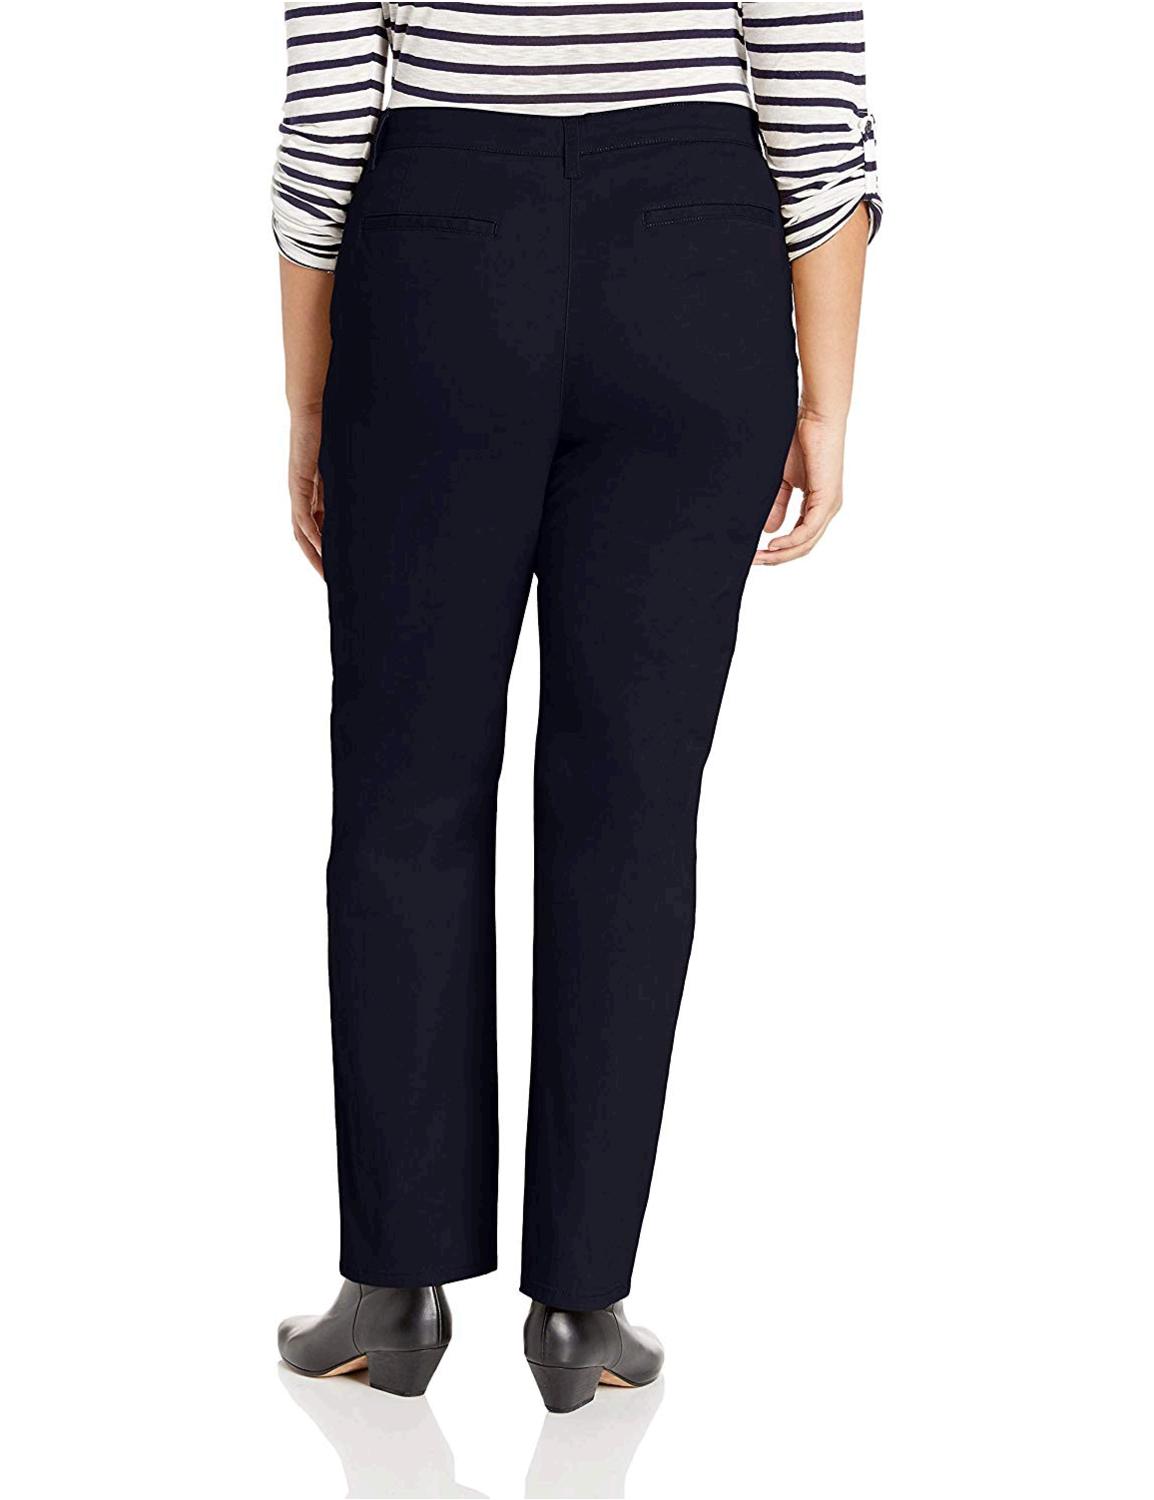 Women's Amanda Trouser Pant,, Midnight Affair, Size 16.0 VxS1 | eBay